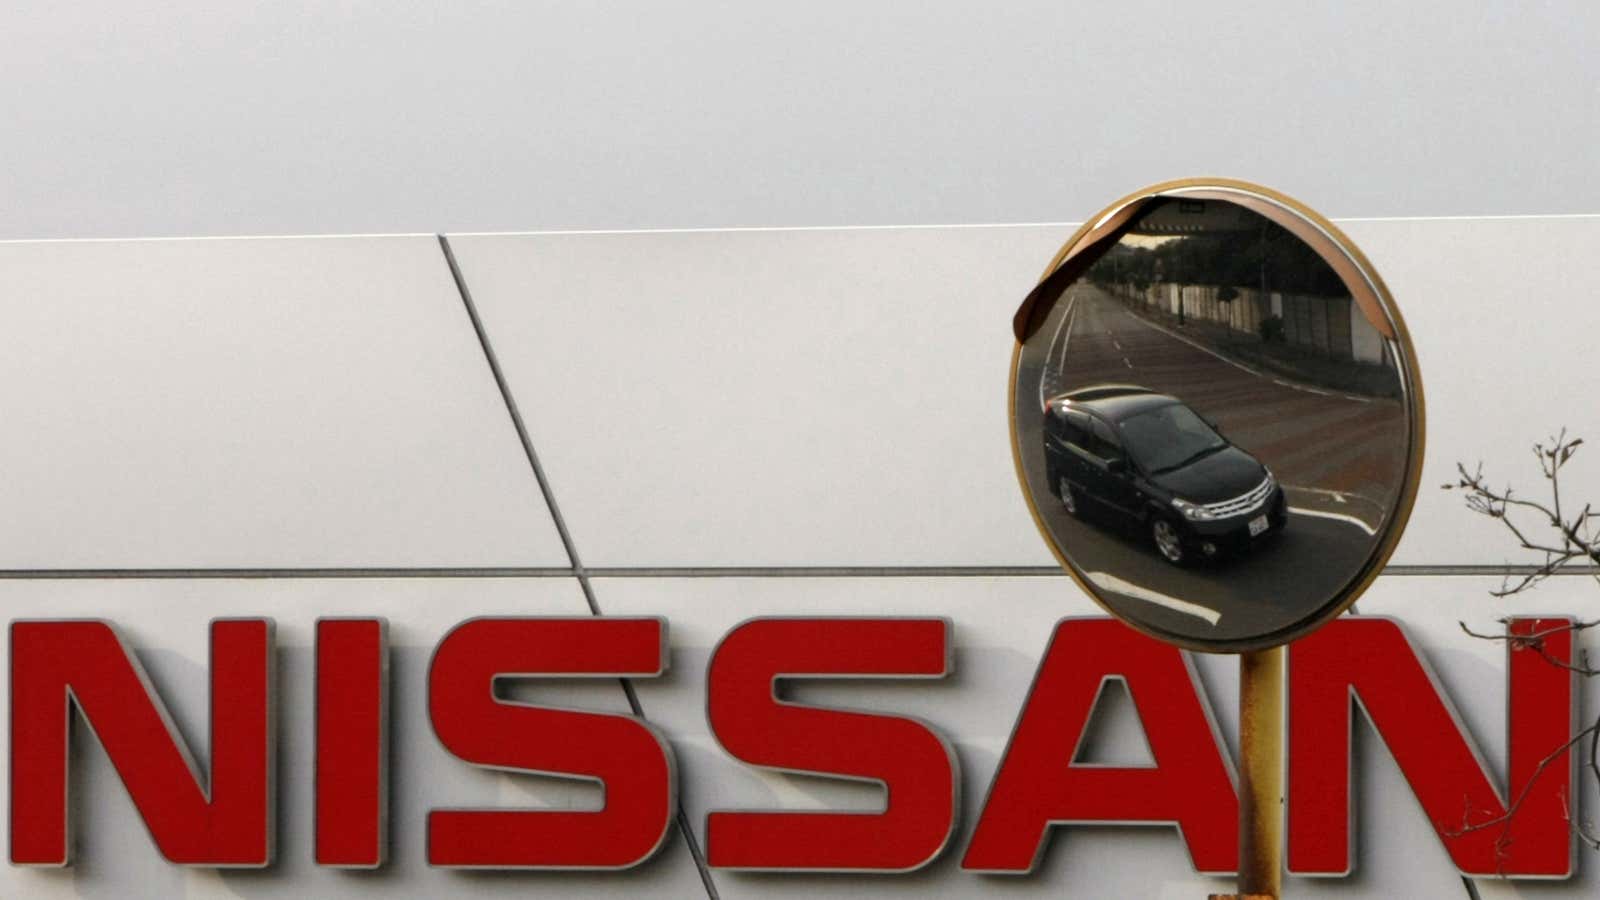 Nissan needs to put this massive international SUV recall behind it.